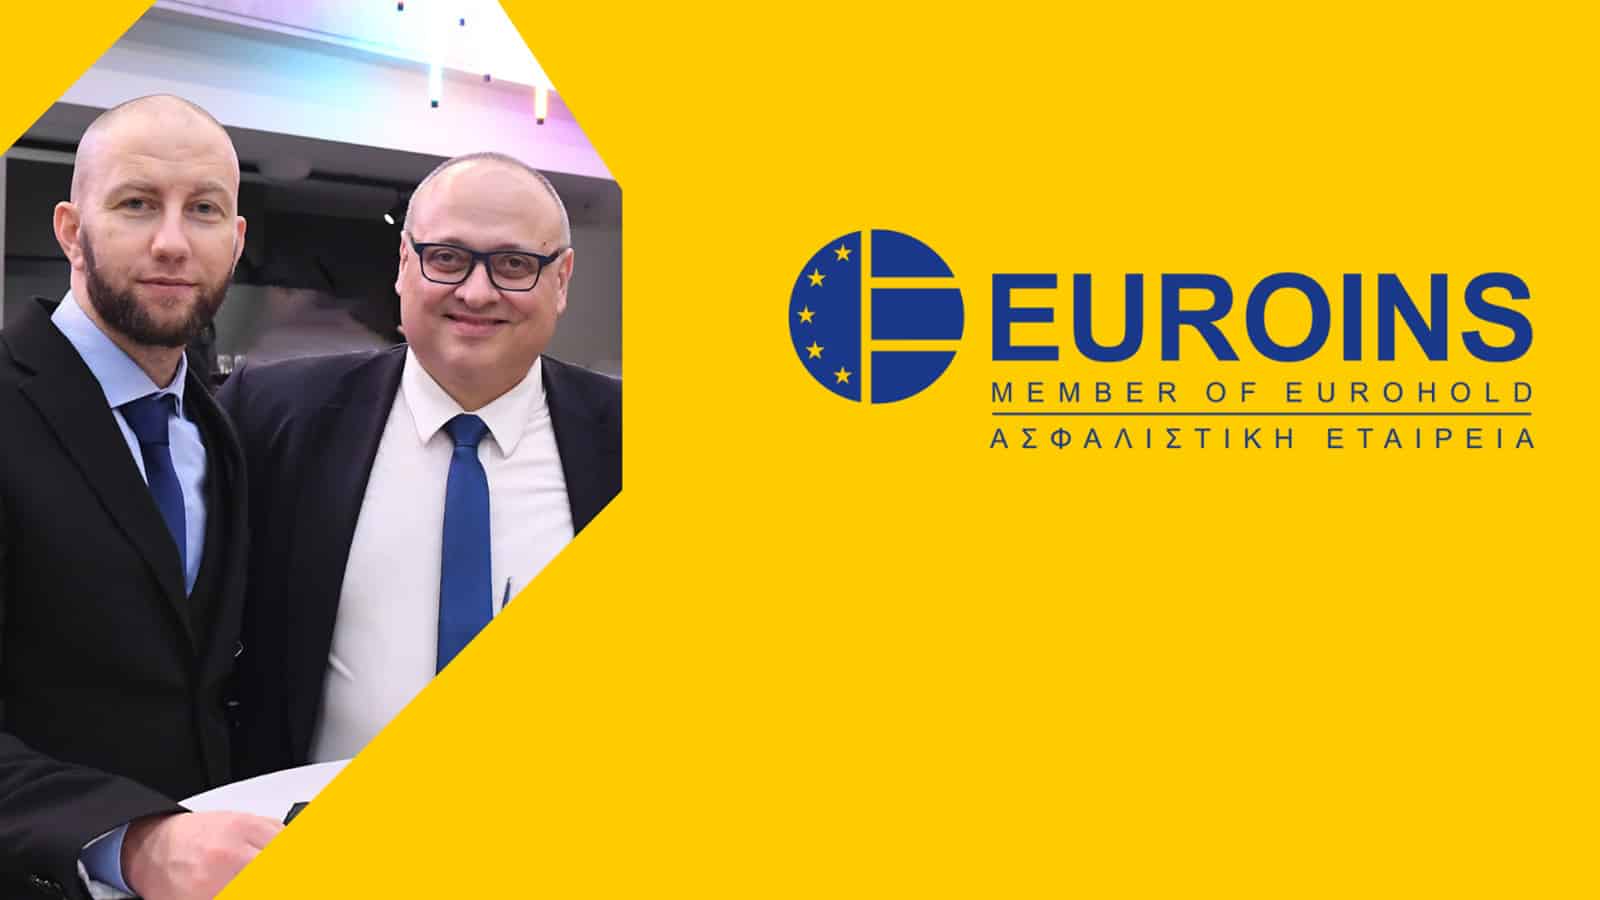 Euroins Ελλάδος: Ενίσχυση της εταιρικής διακυβέρνησης με νέα διοικητική δομή